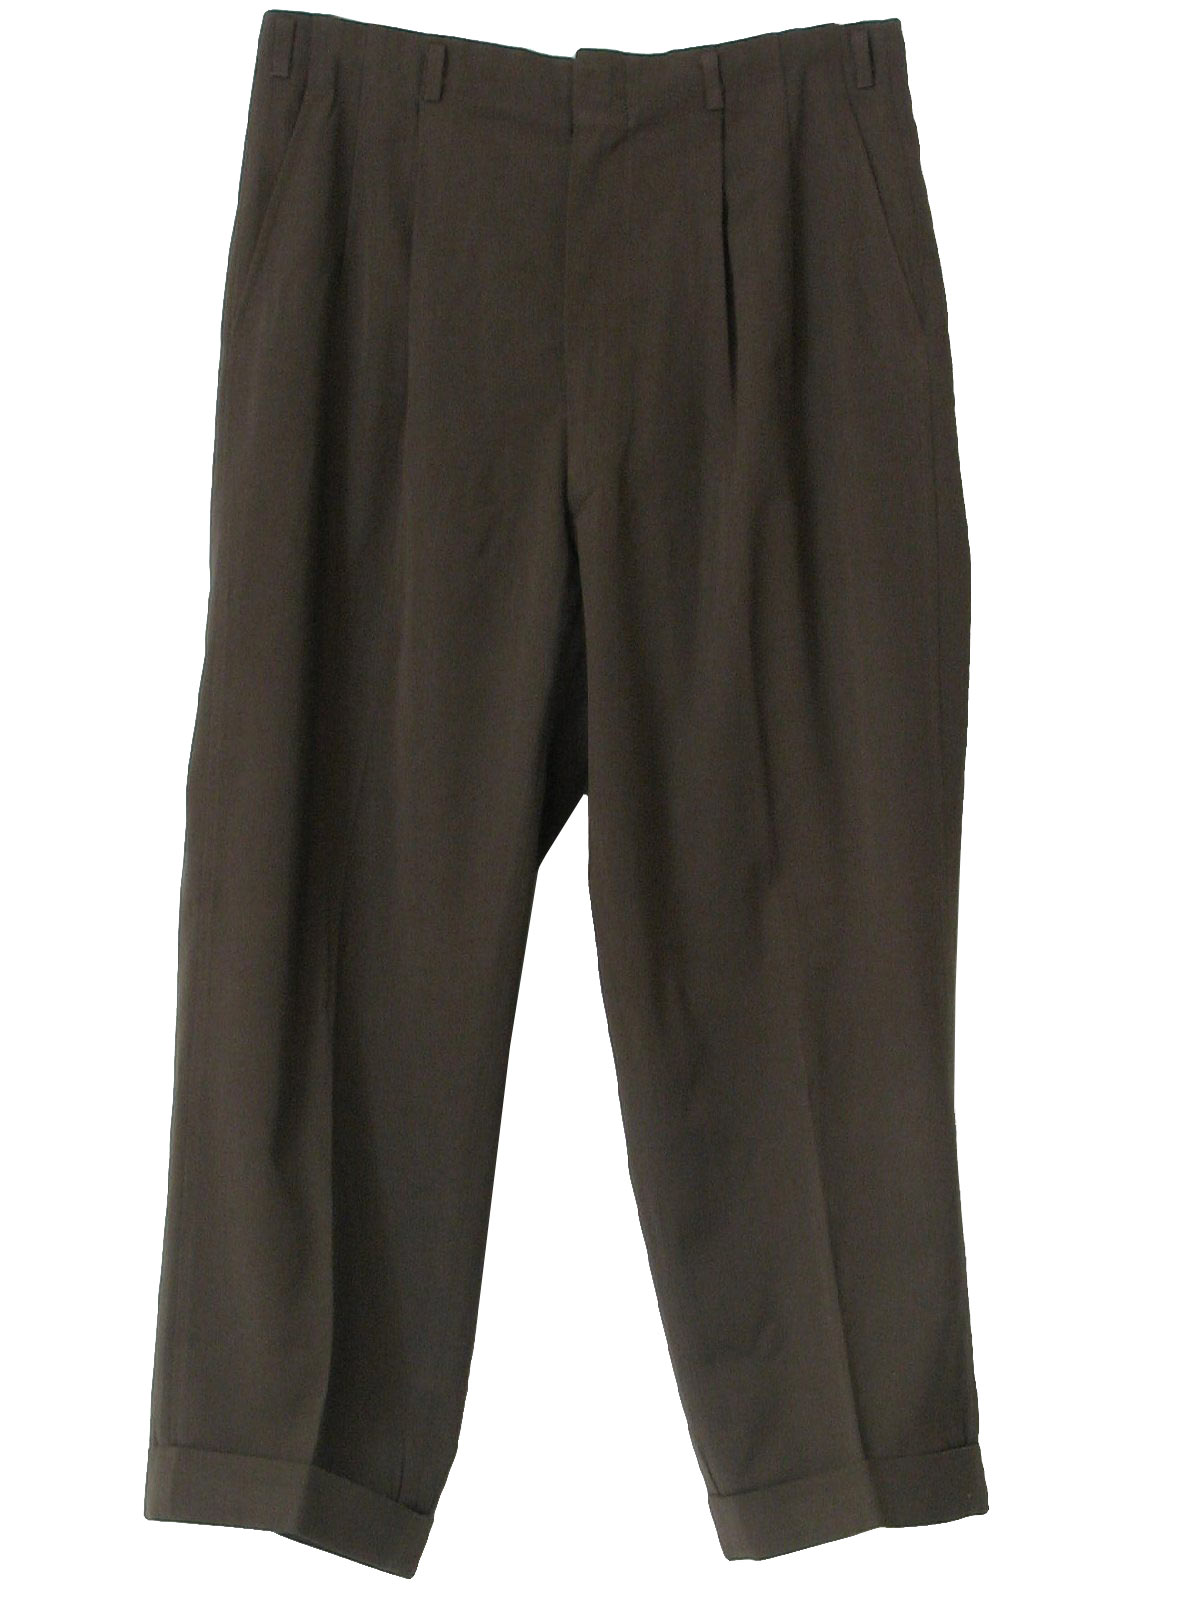 1940s Vintage Pants: Late 40s -Missing Label- Mens dull olive brown ...